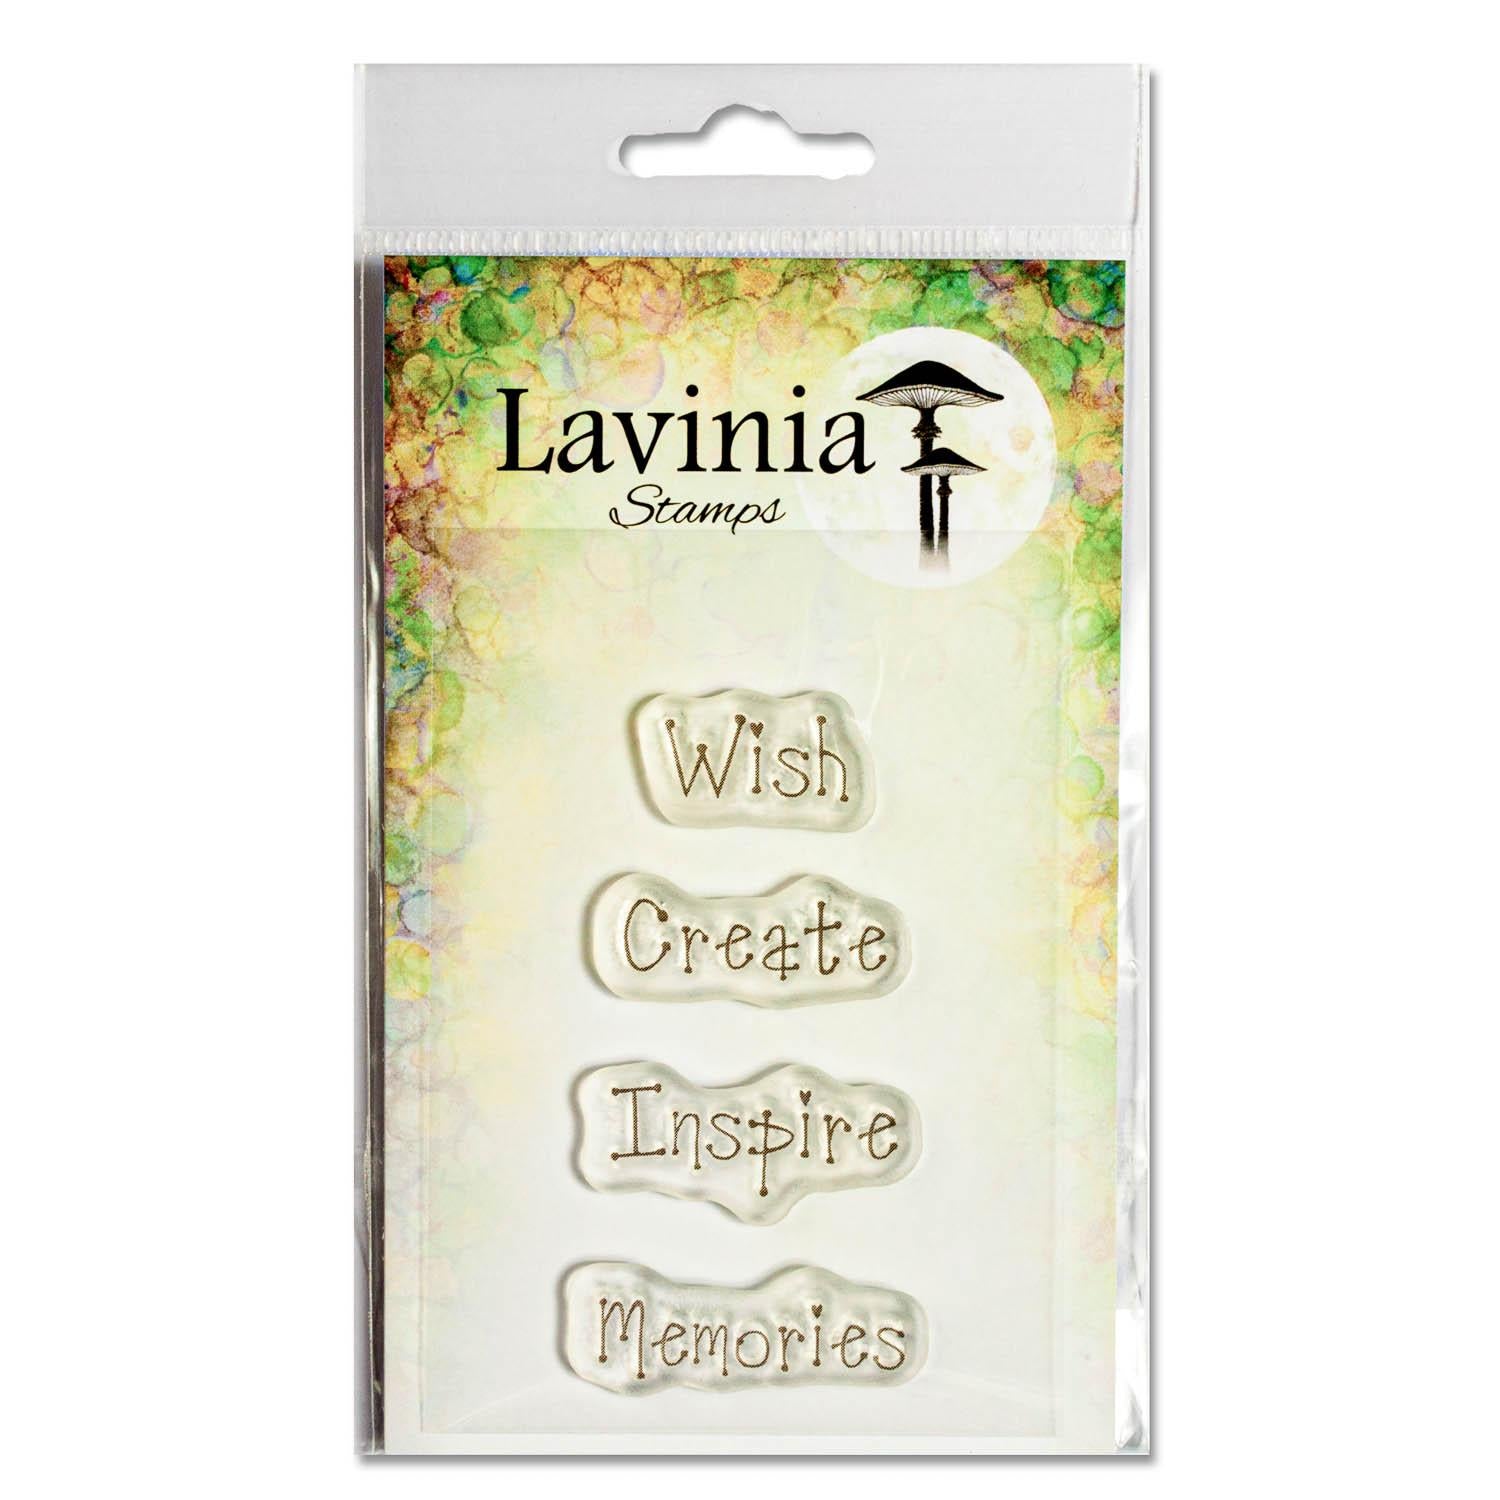 Lavinia Stamps - Balance